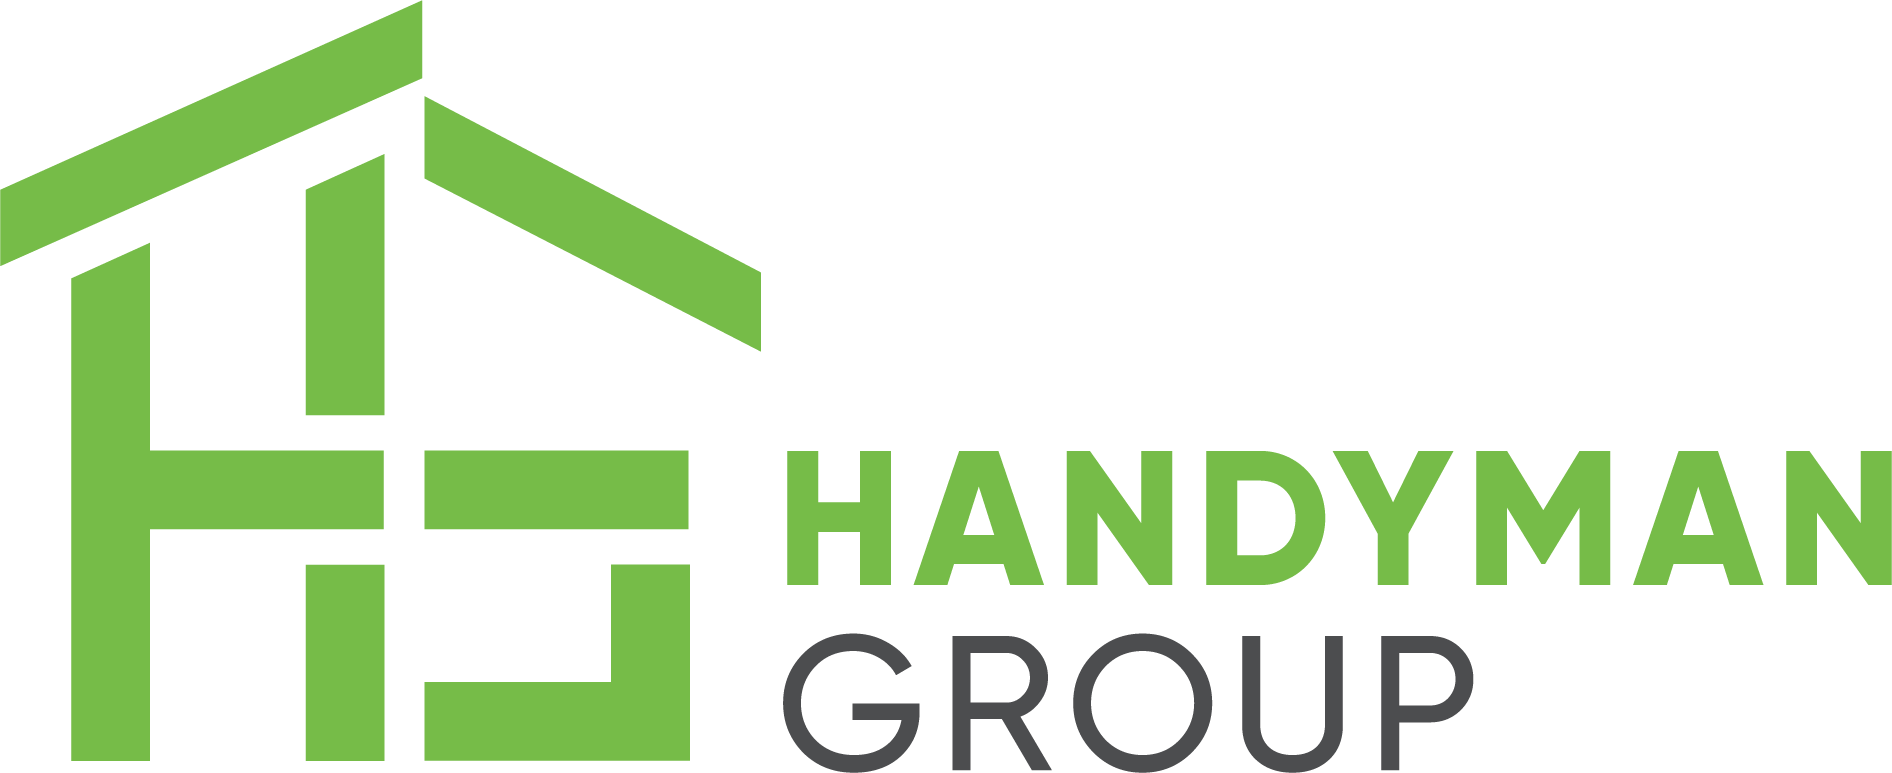 The Handyman Group 